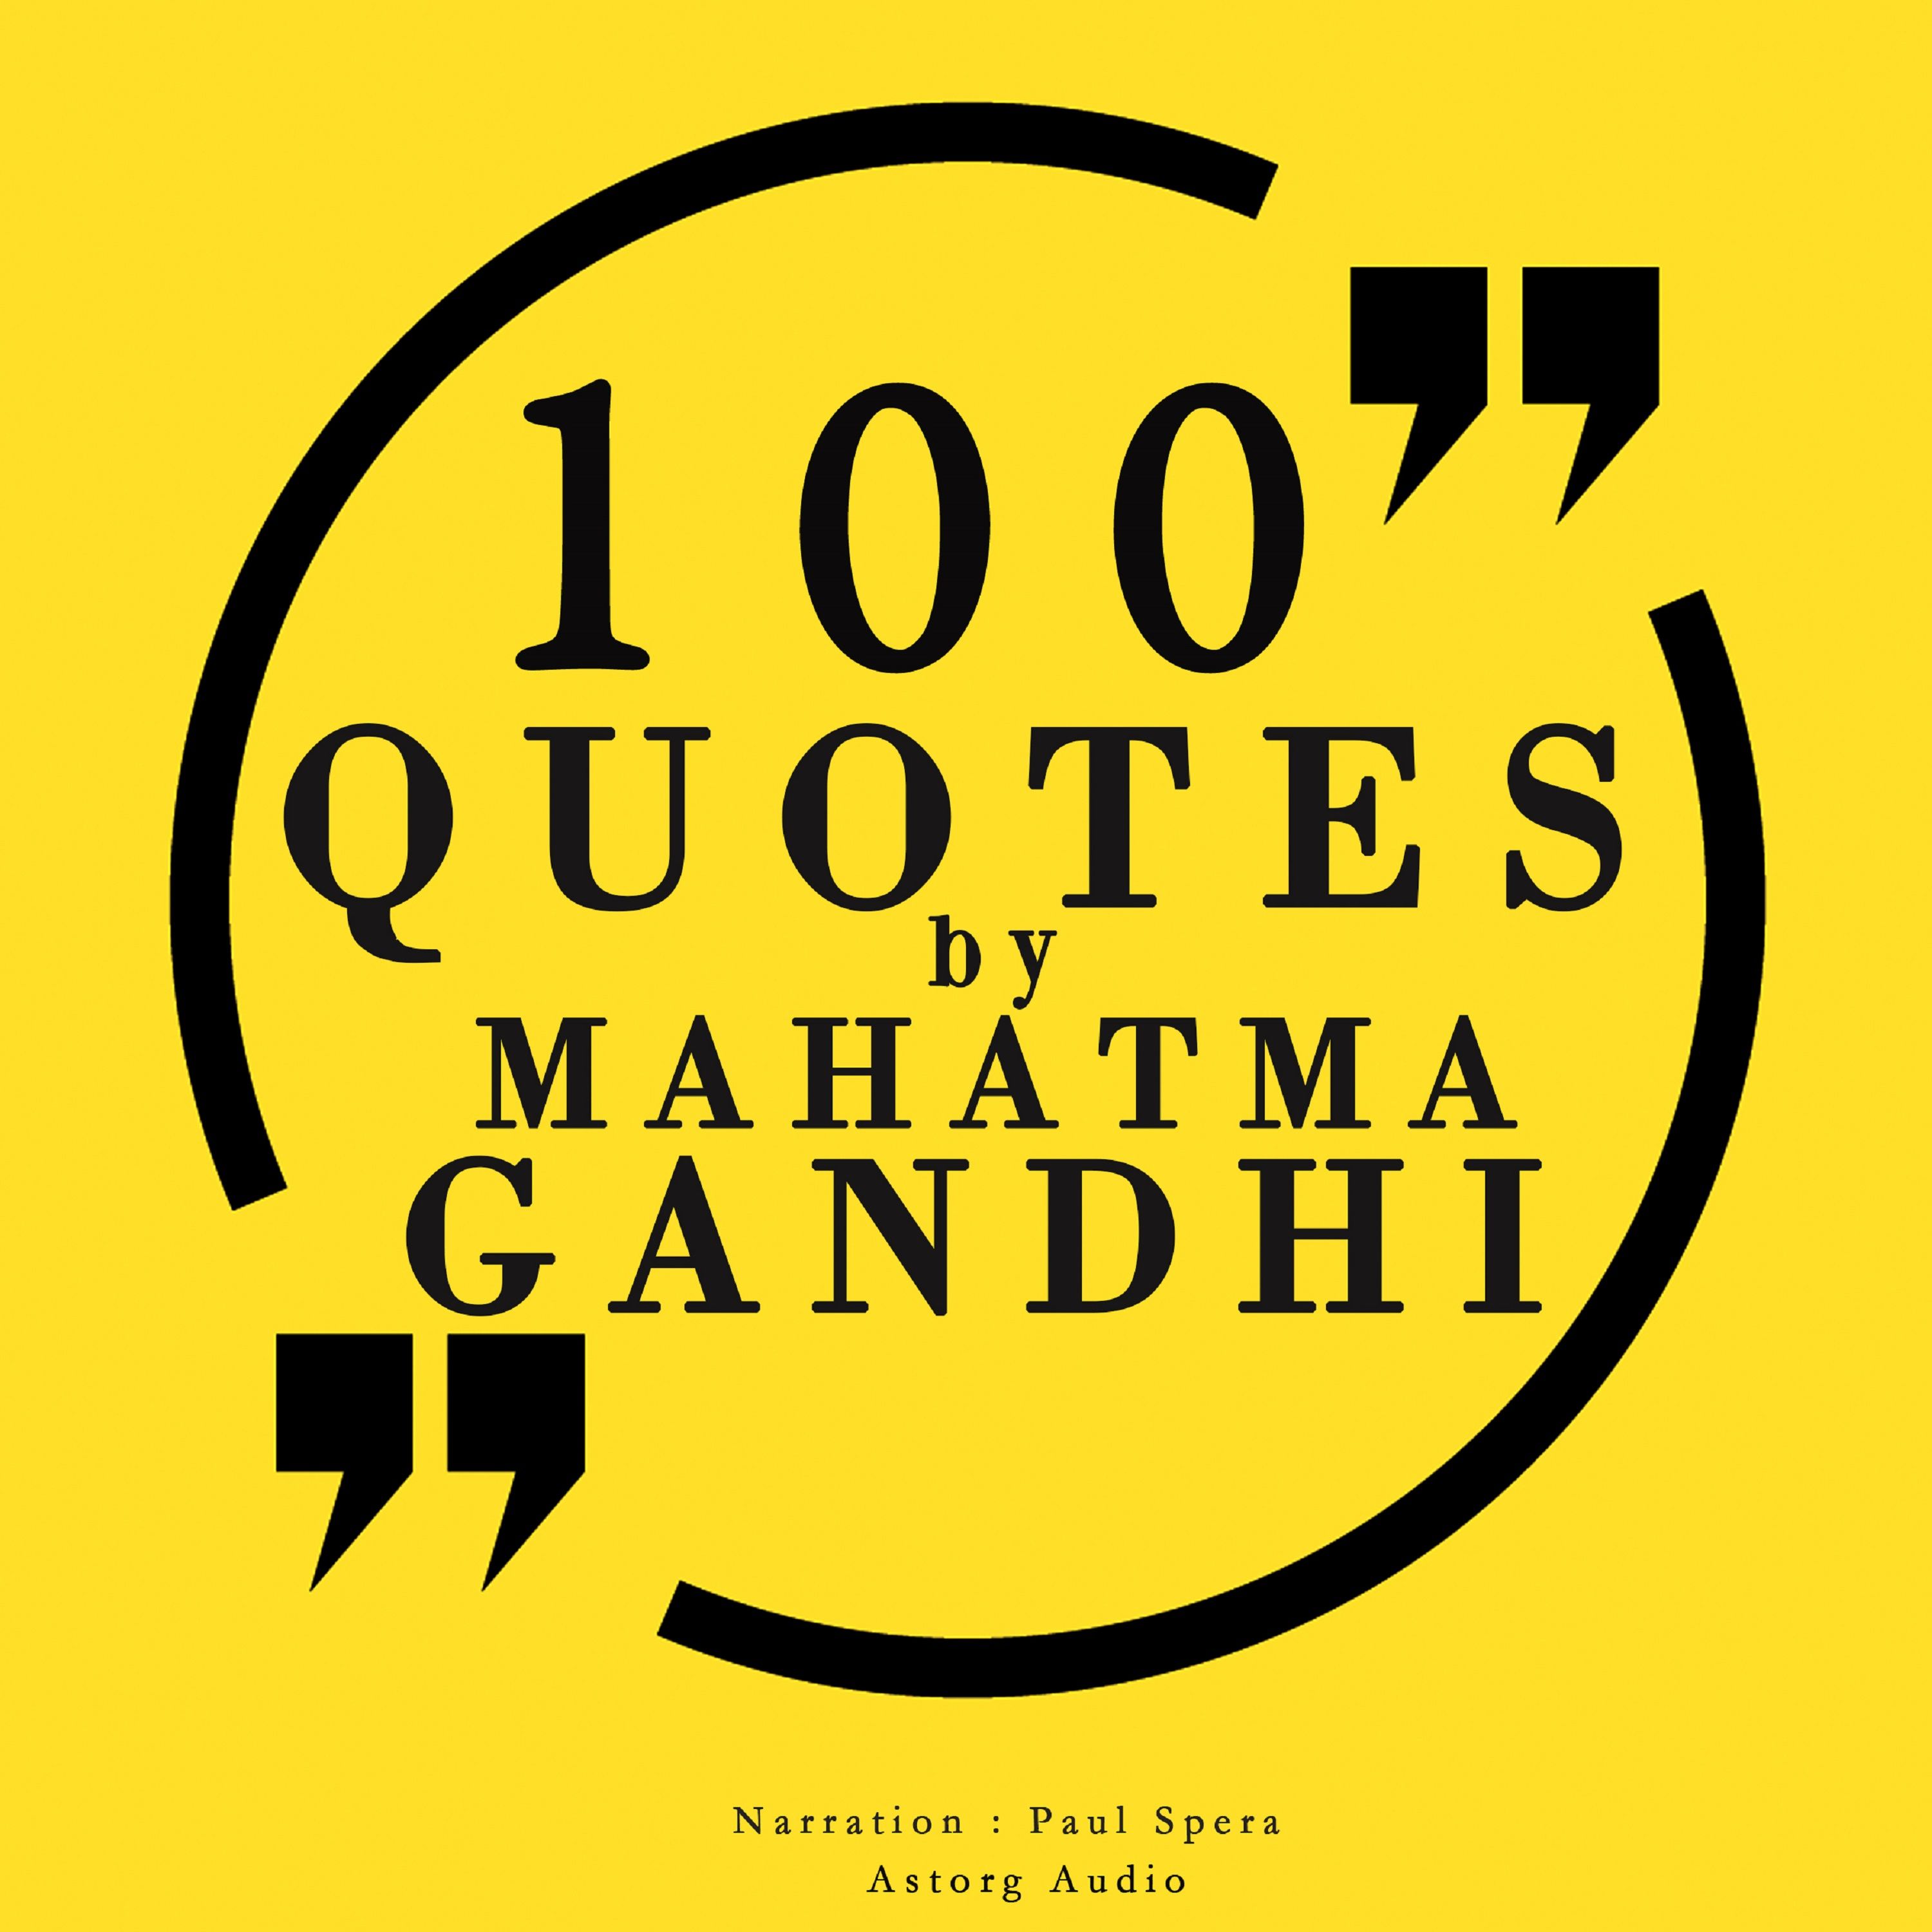 100 Quotes by Mahatma Gandhi, lydbog af Mahatma Gandhi